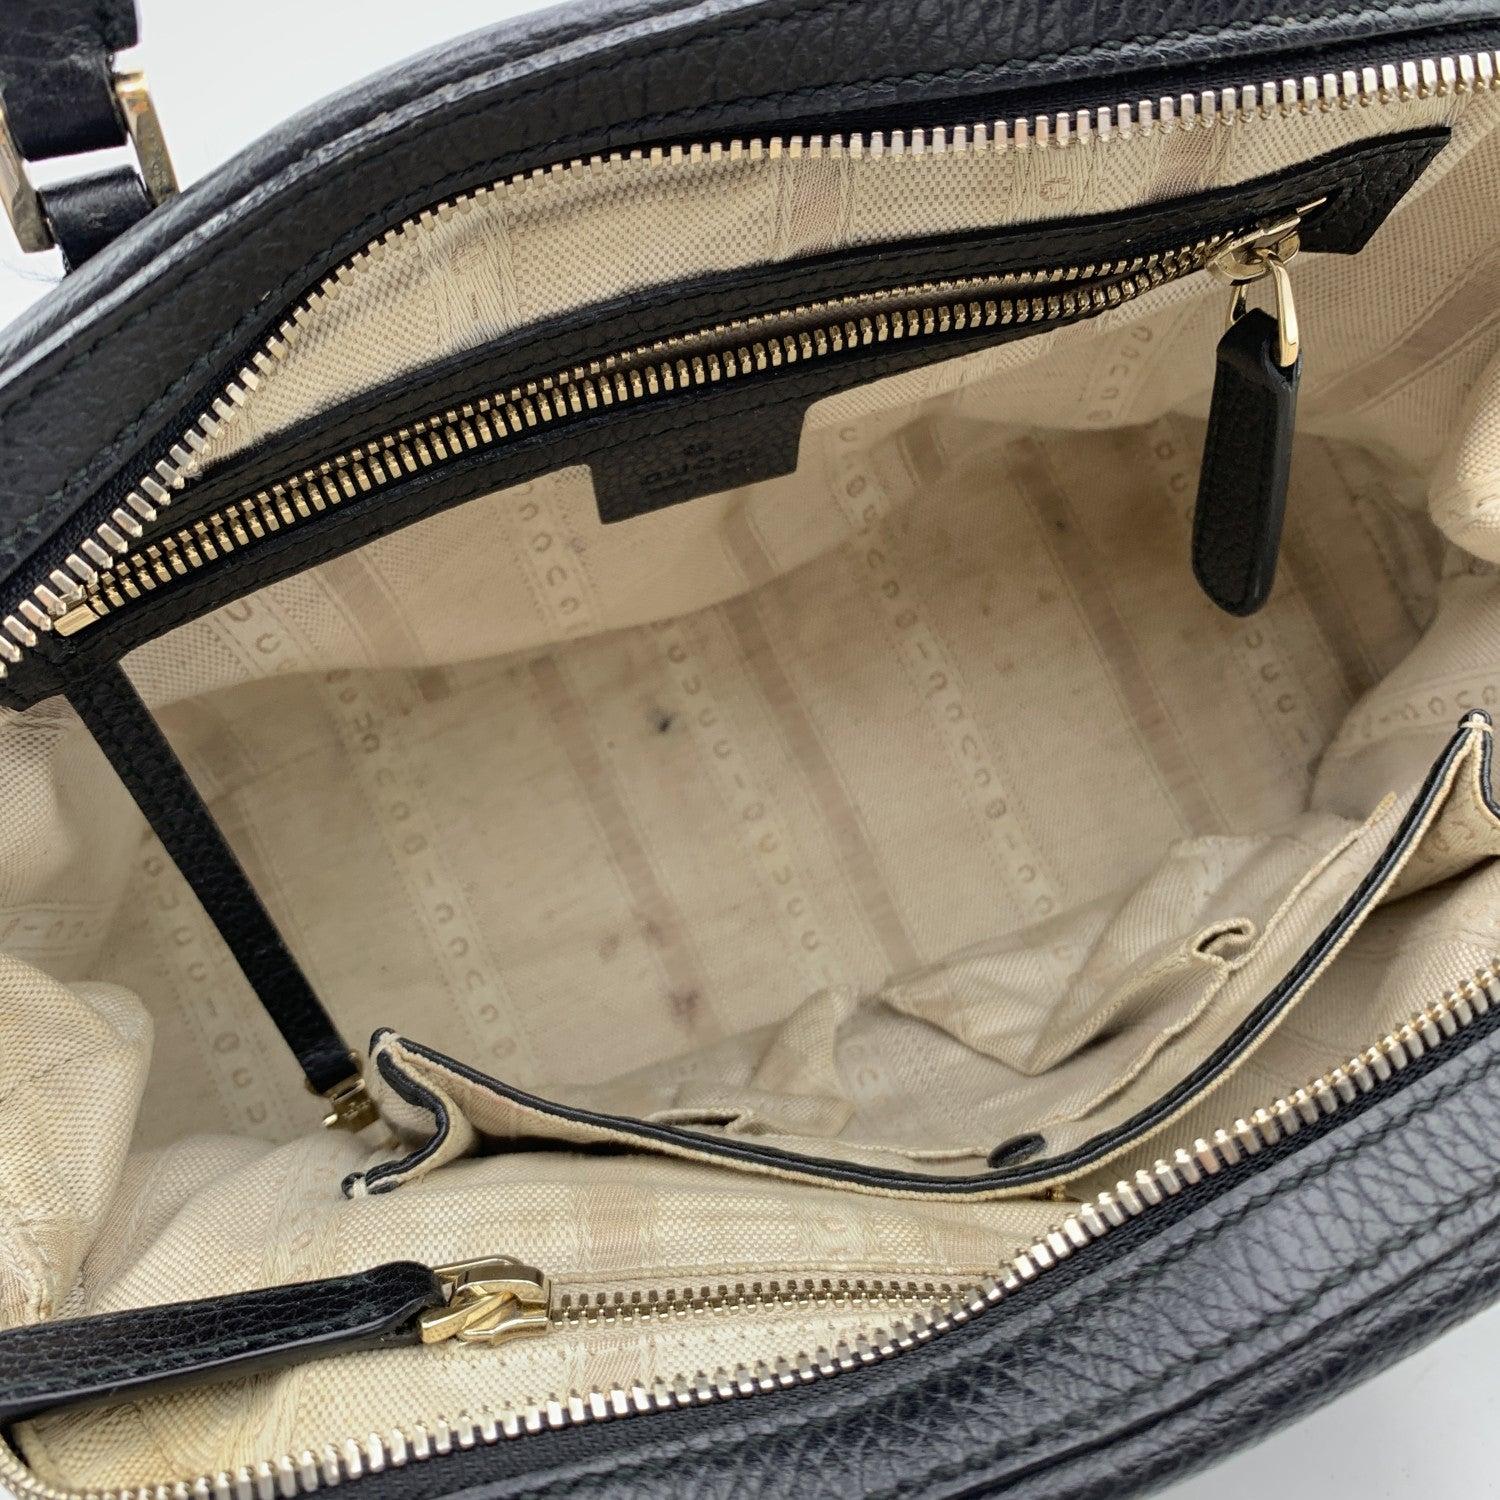 Gucci Black Leather Lady Dollar Dome Satchel Bag Handbag 1